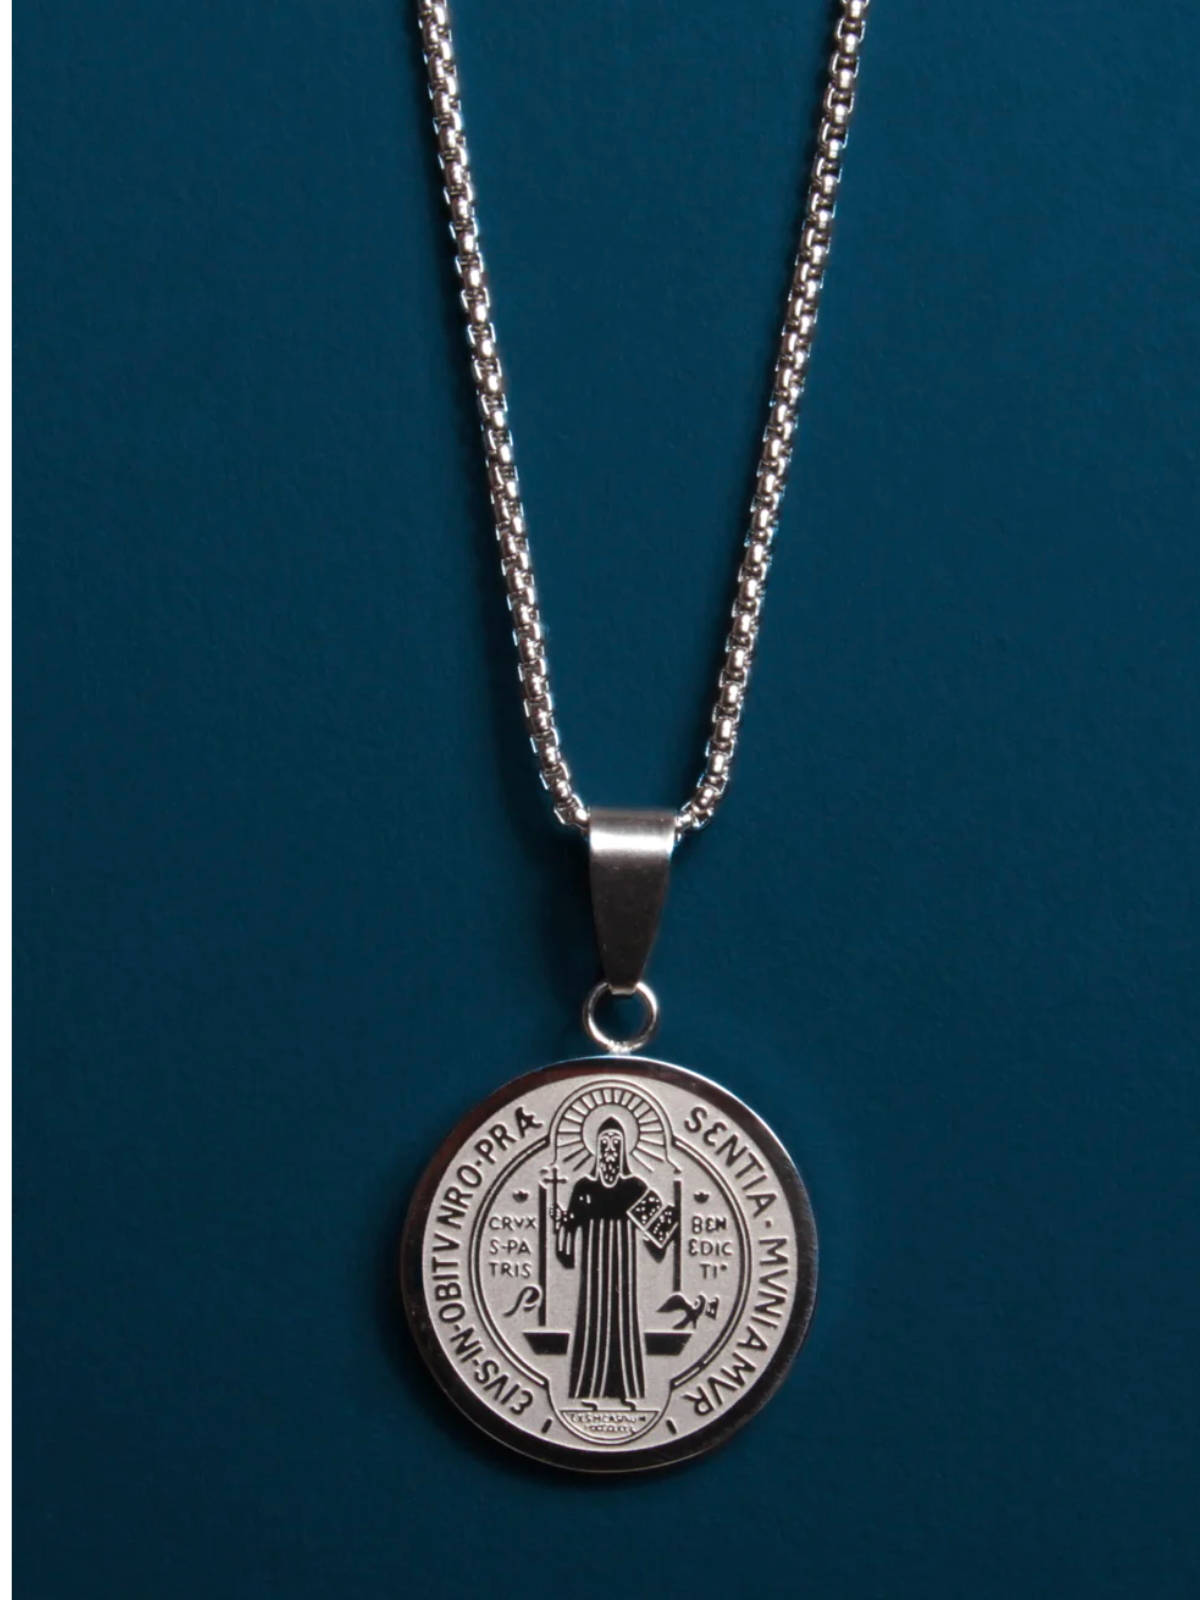 St. Benedict Medal Necklace - Large